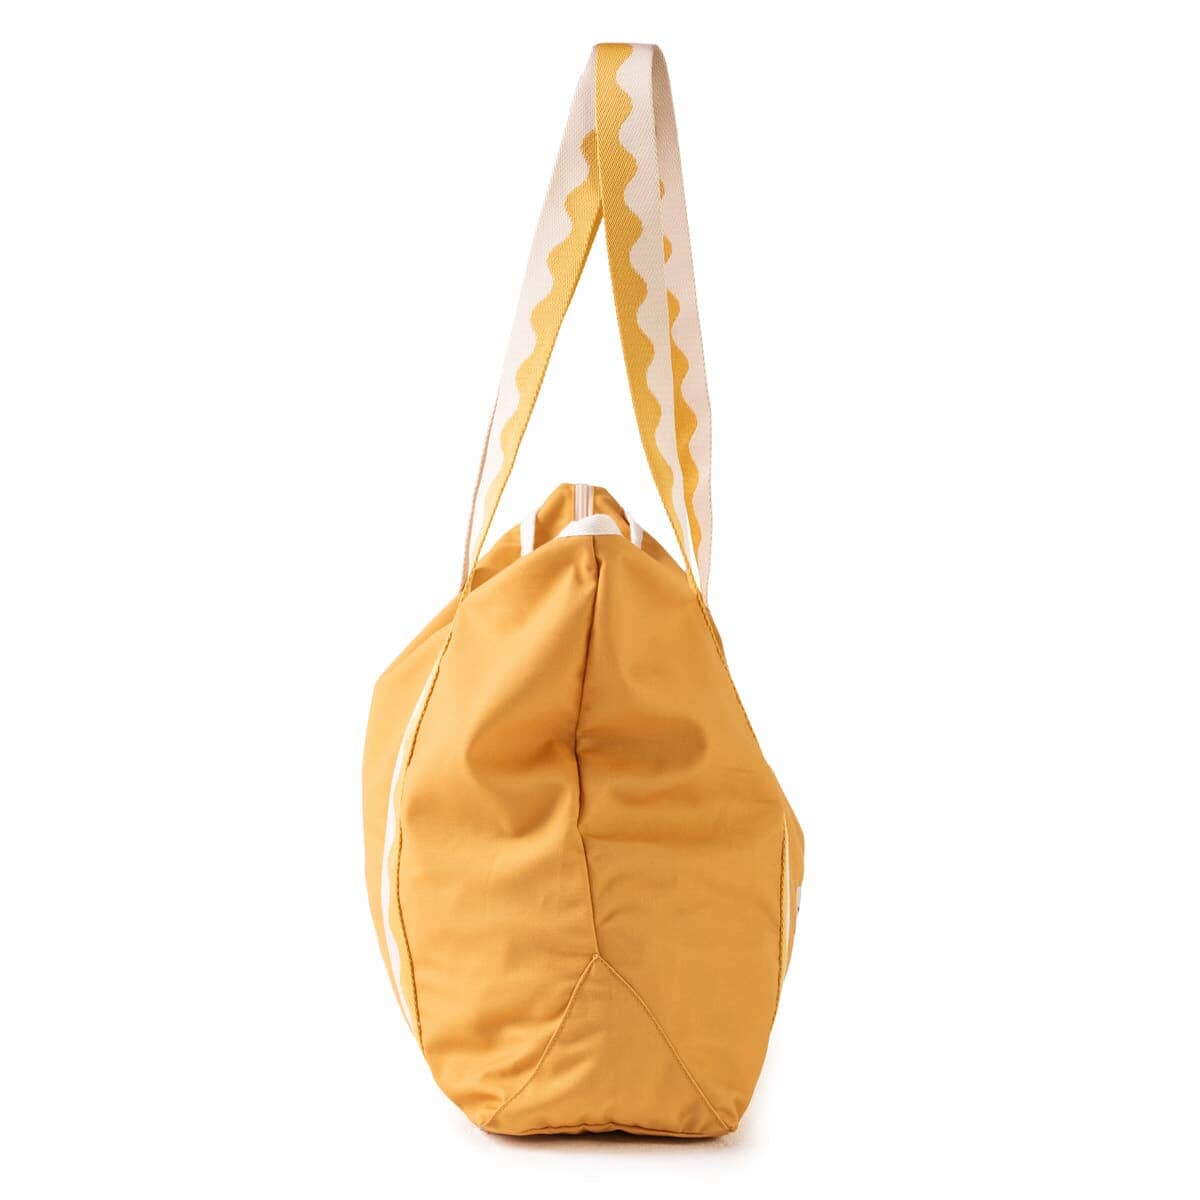 Studio image of riviera mimosa beach bag